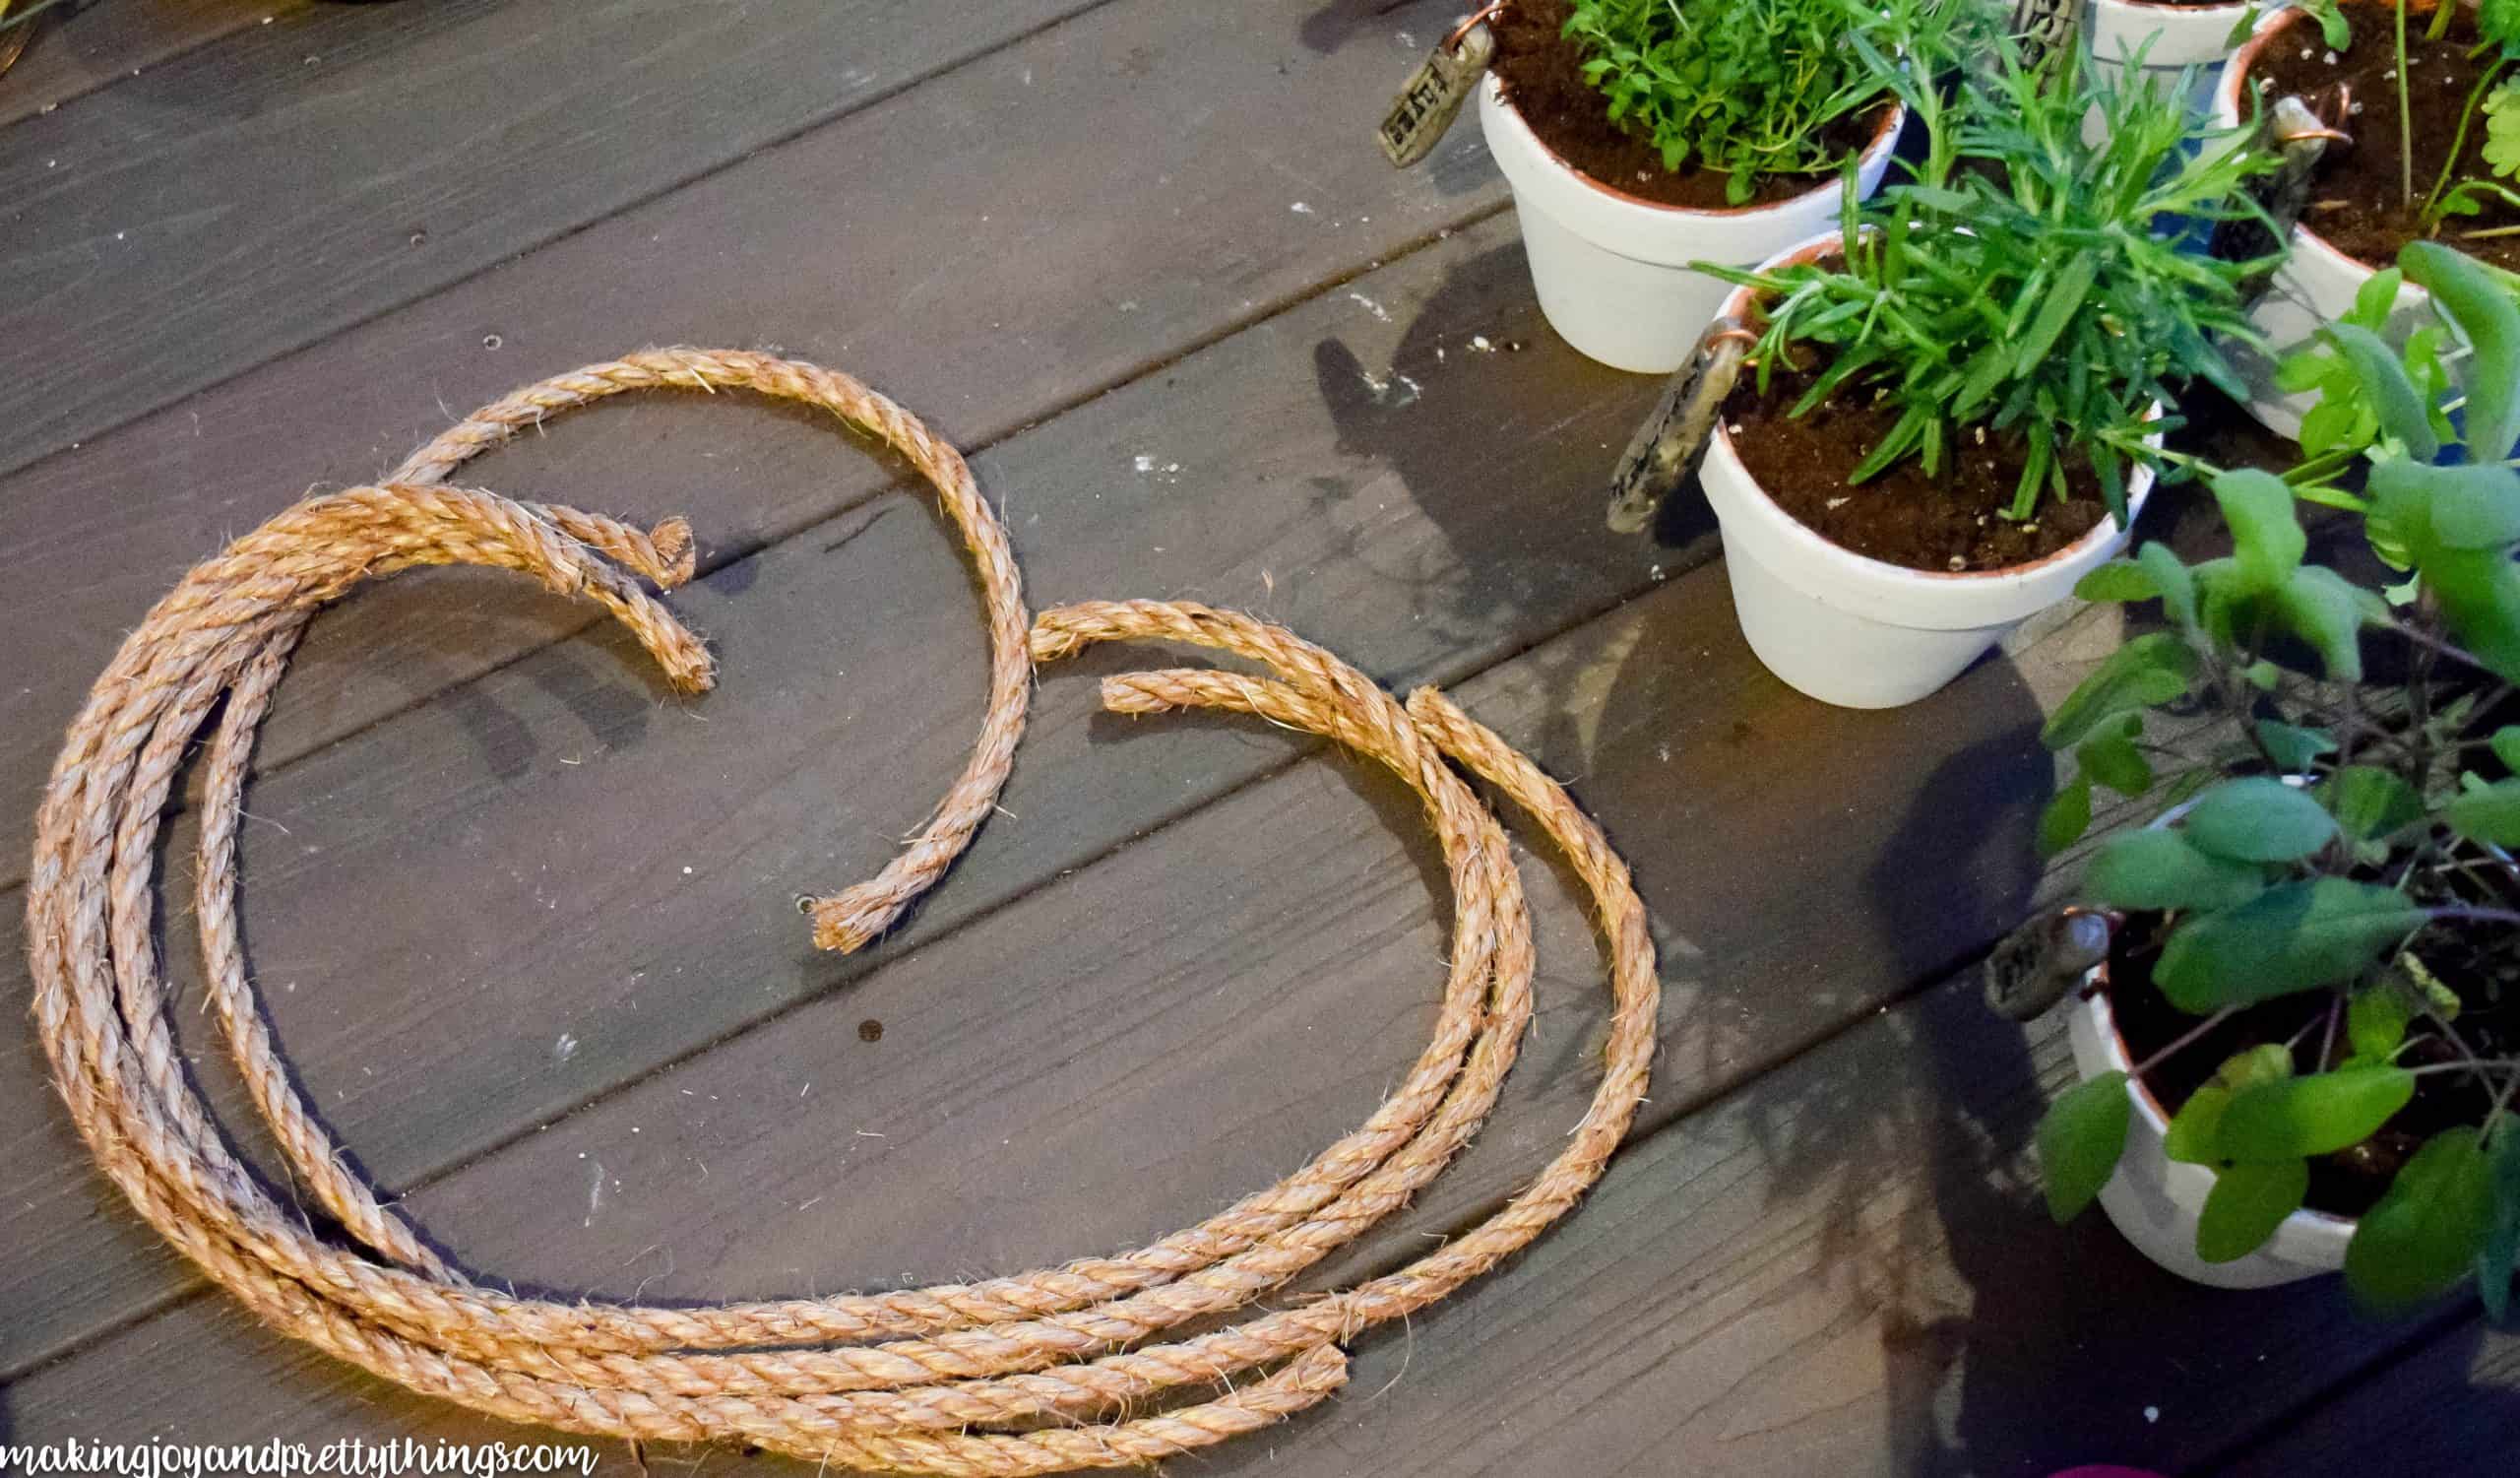 Using rope to hang a cedar board for a garden on a balcony for a DIY house